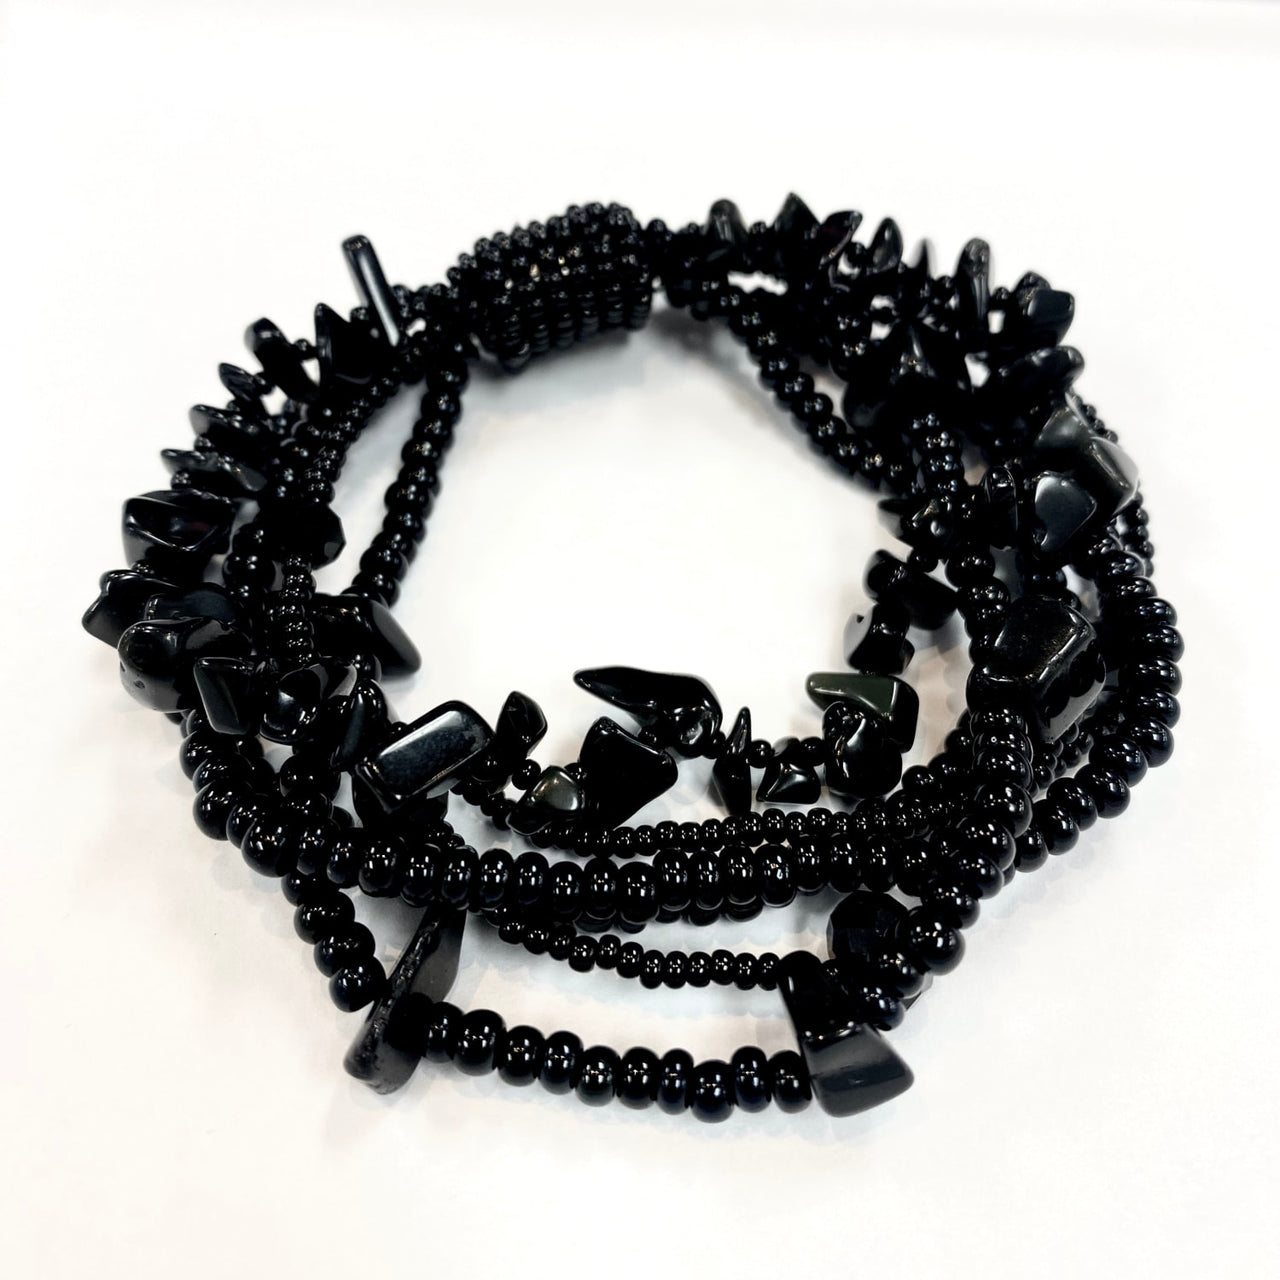 Crystal Beaded Bracelet w/ Magnet Clasp | 7.5’ Black Tourmaline Beads & Crystals